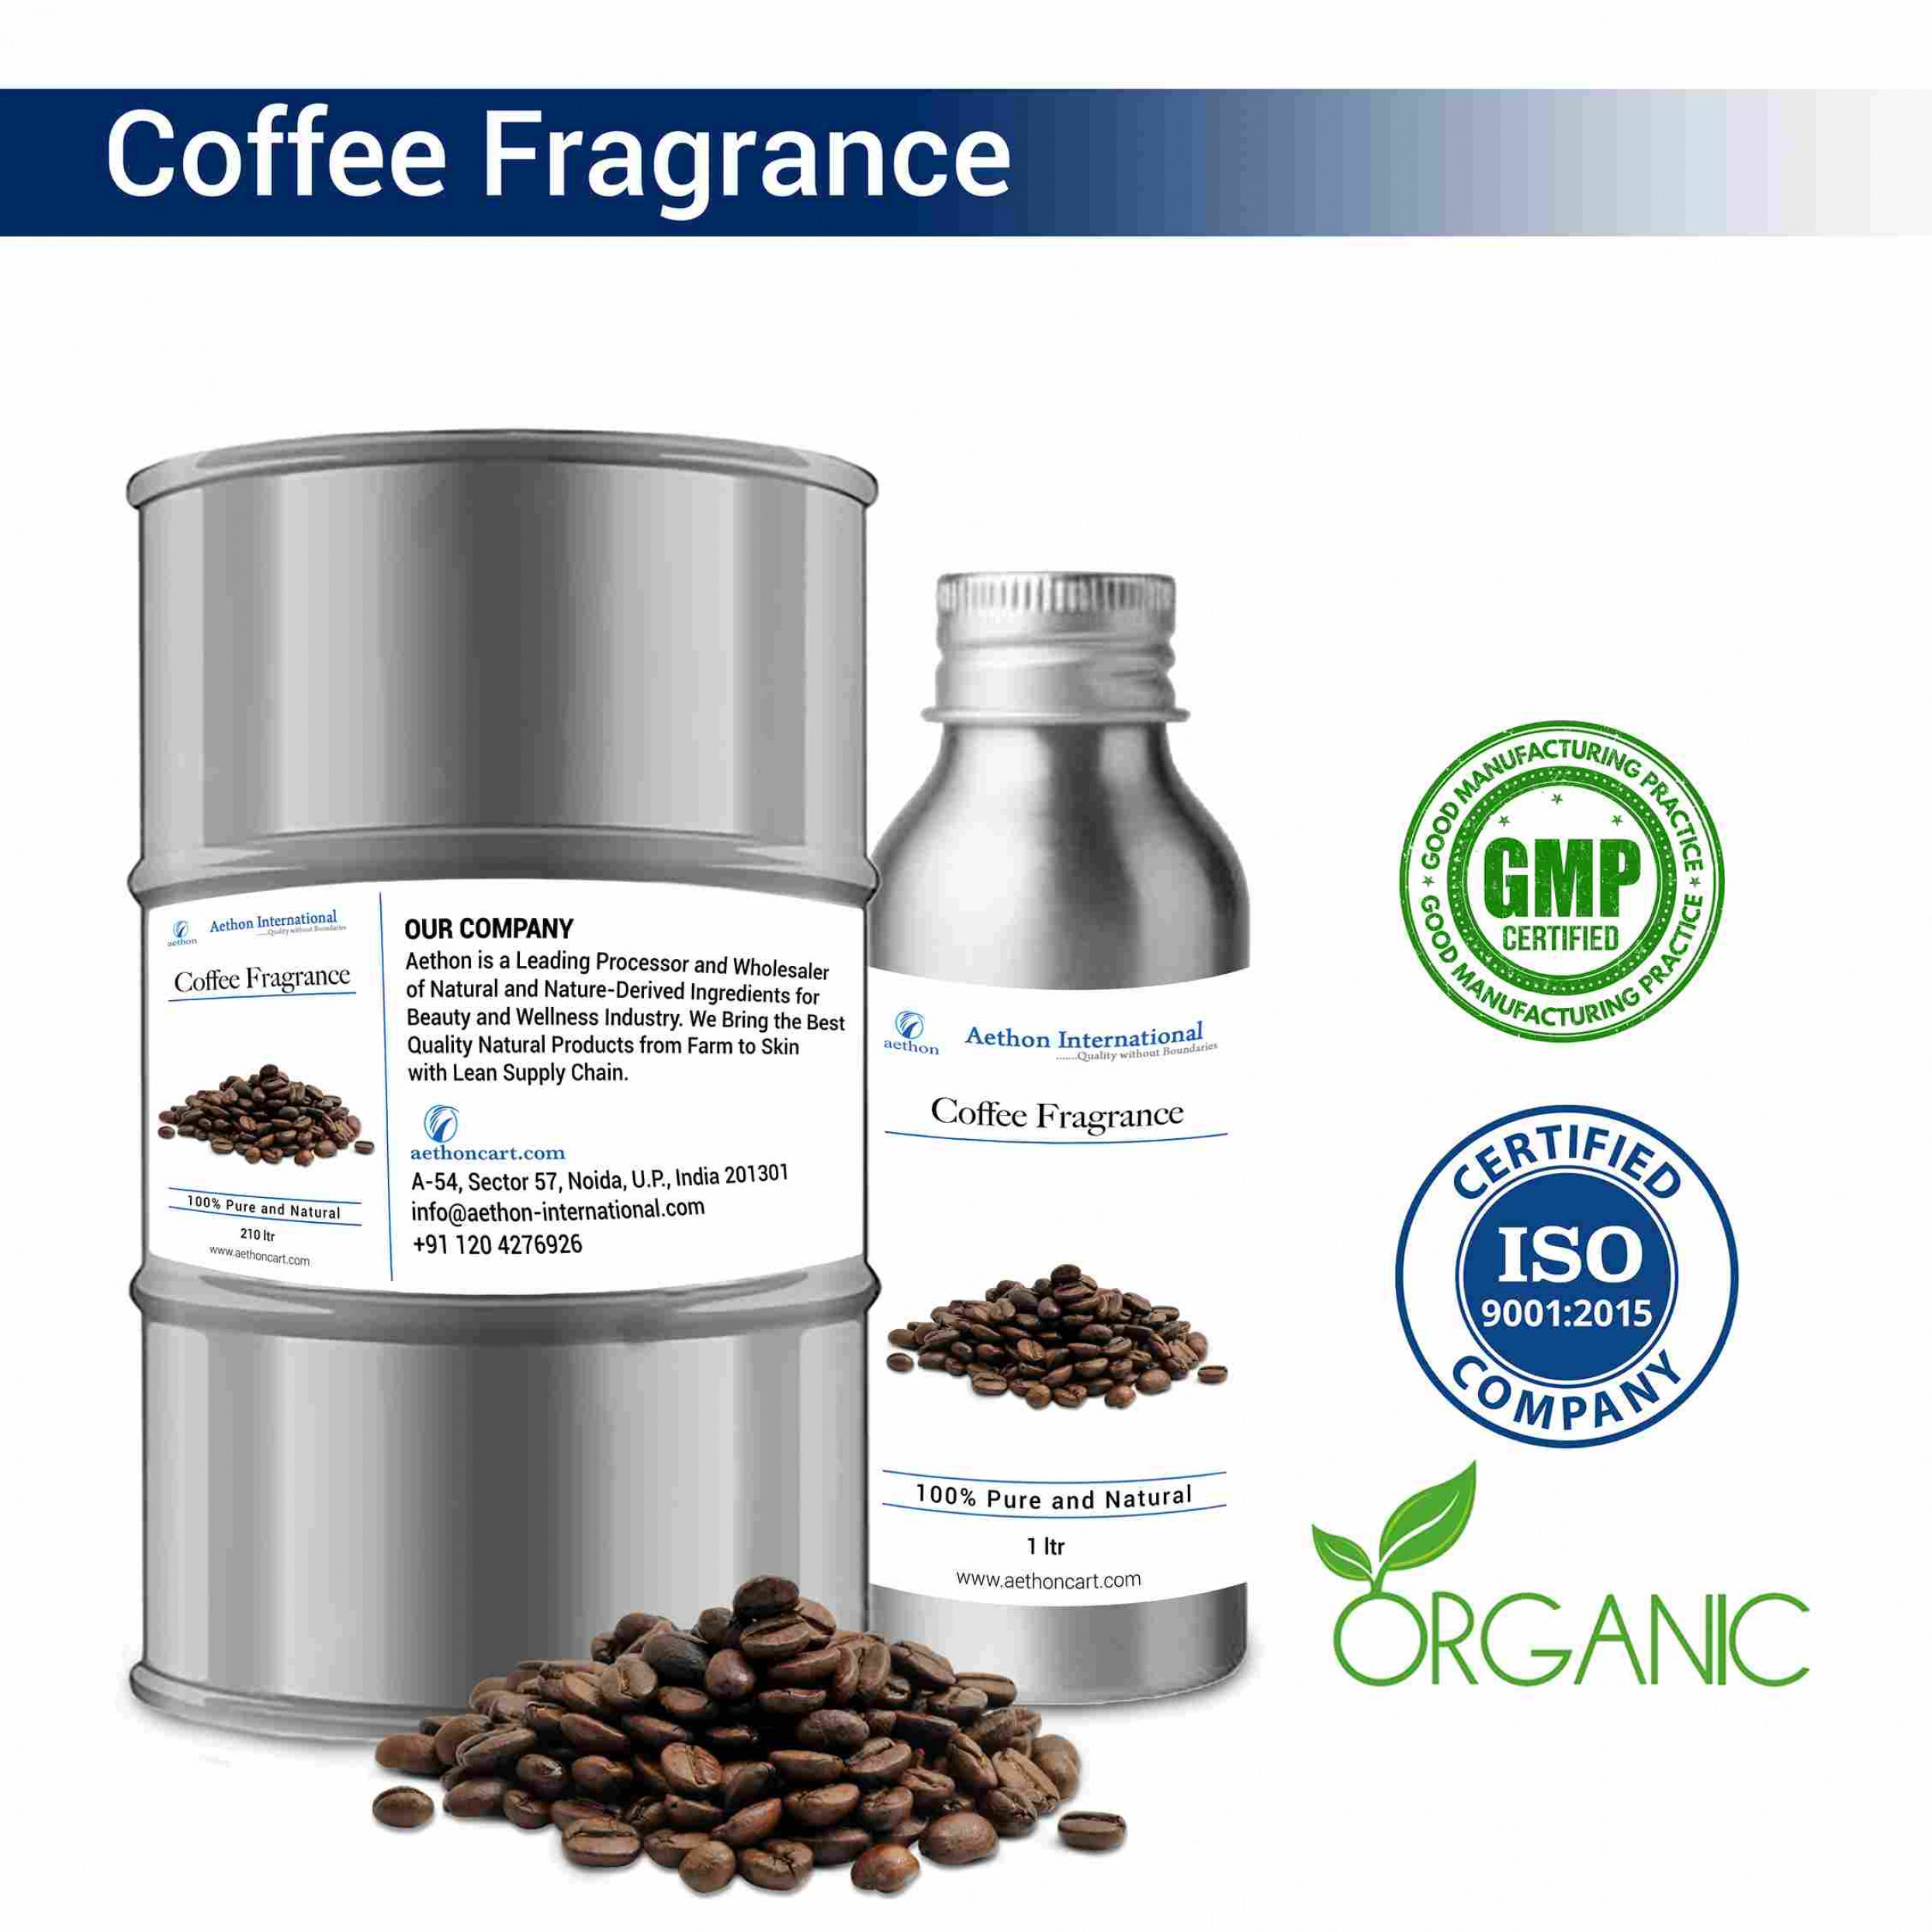 Coffee Fragrance